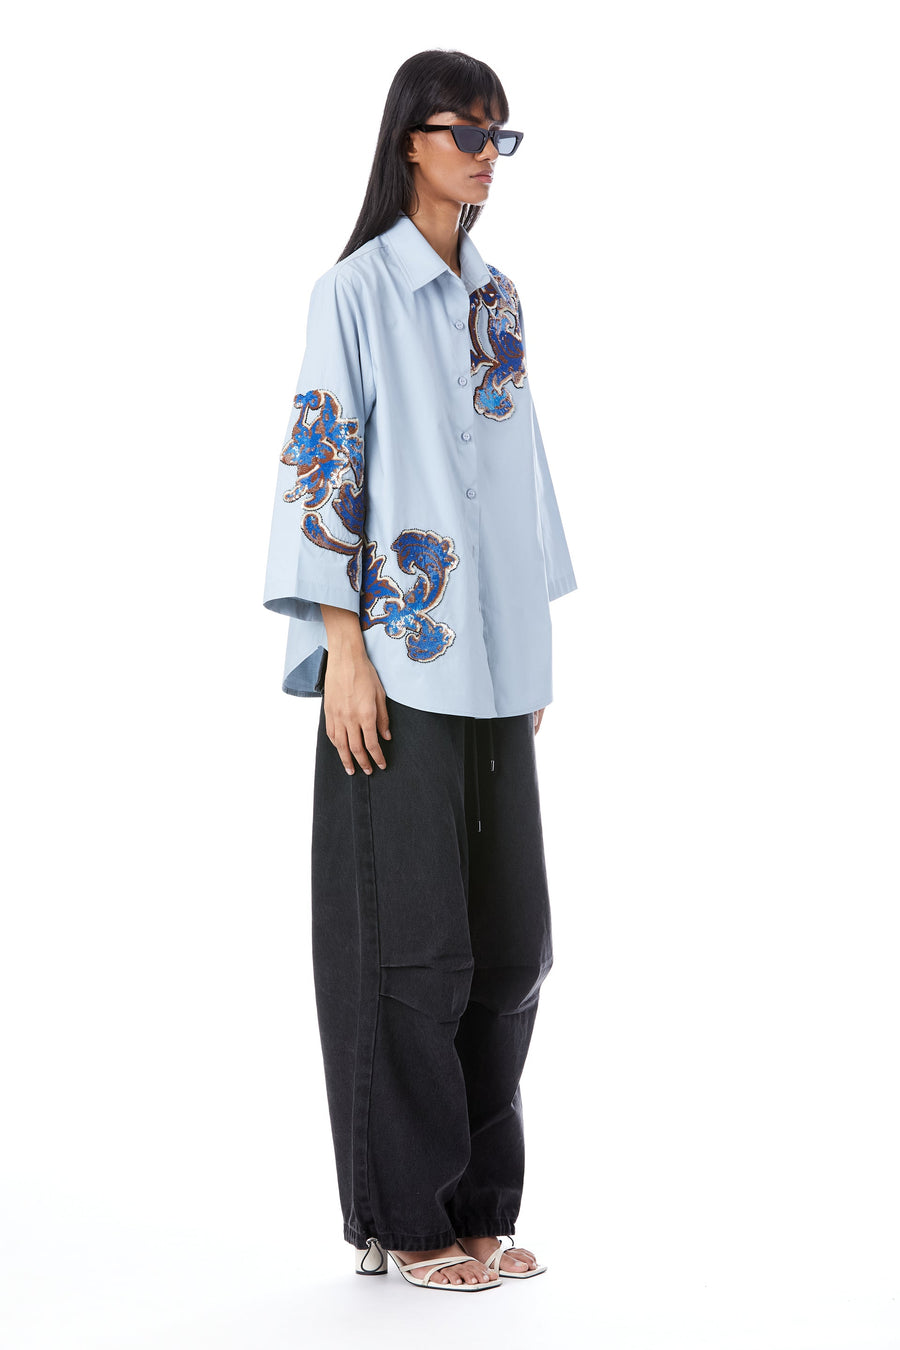 'Renaissance' Hand-Embellished Shirt - Kanika Goyal Label